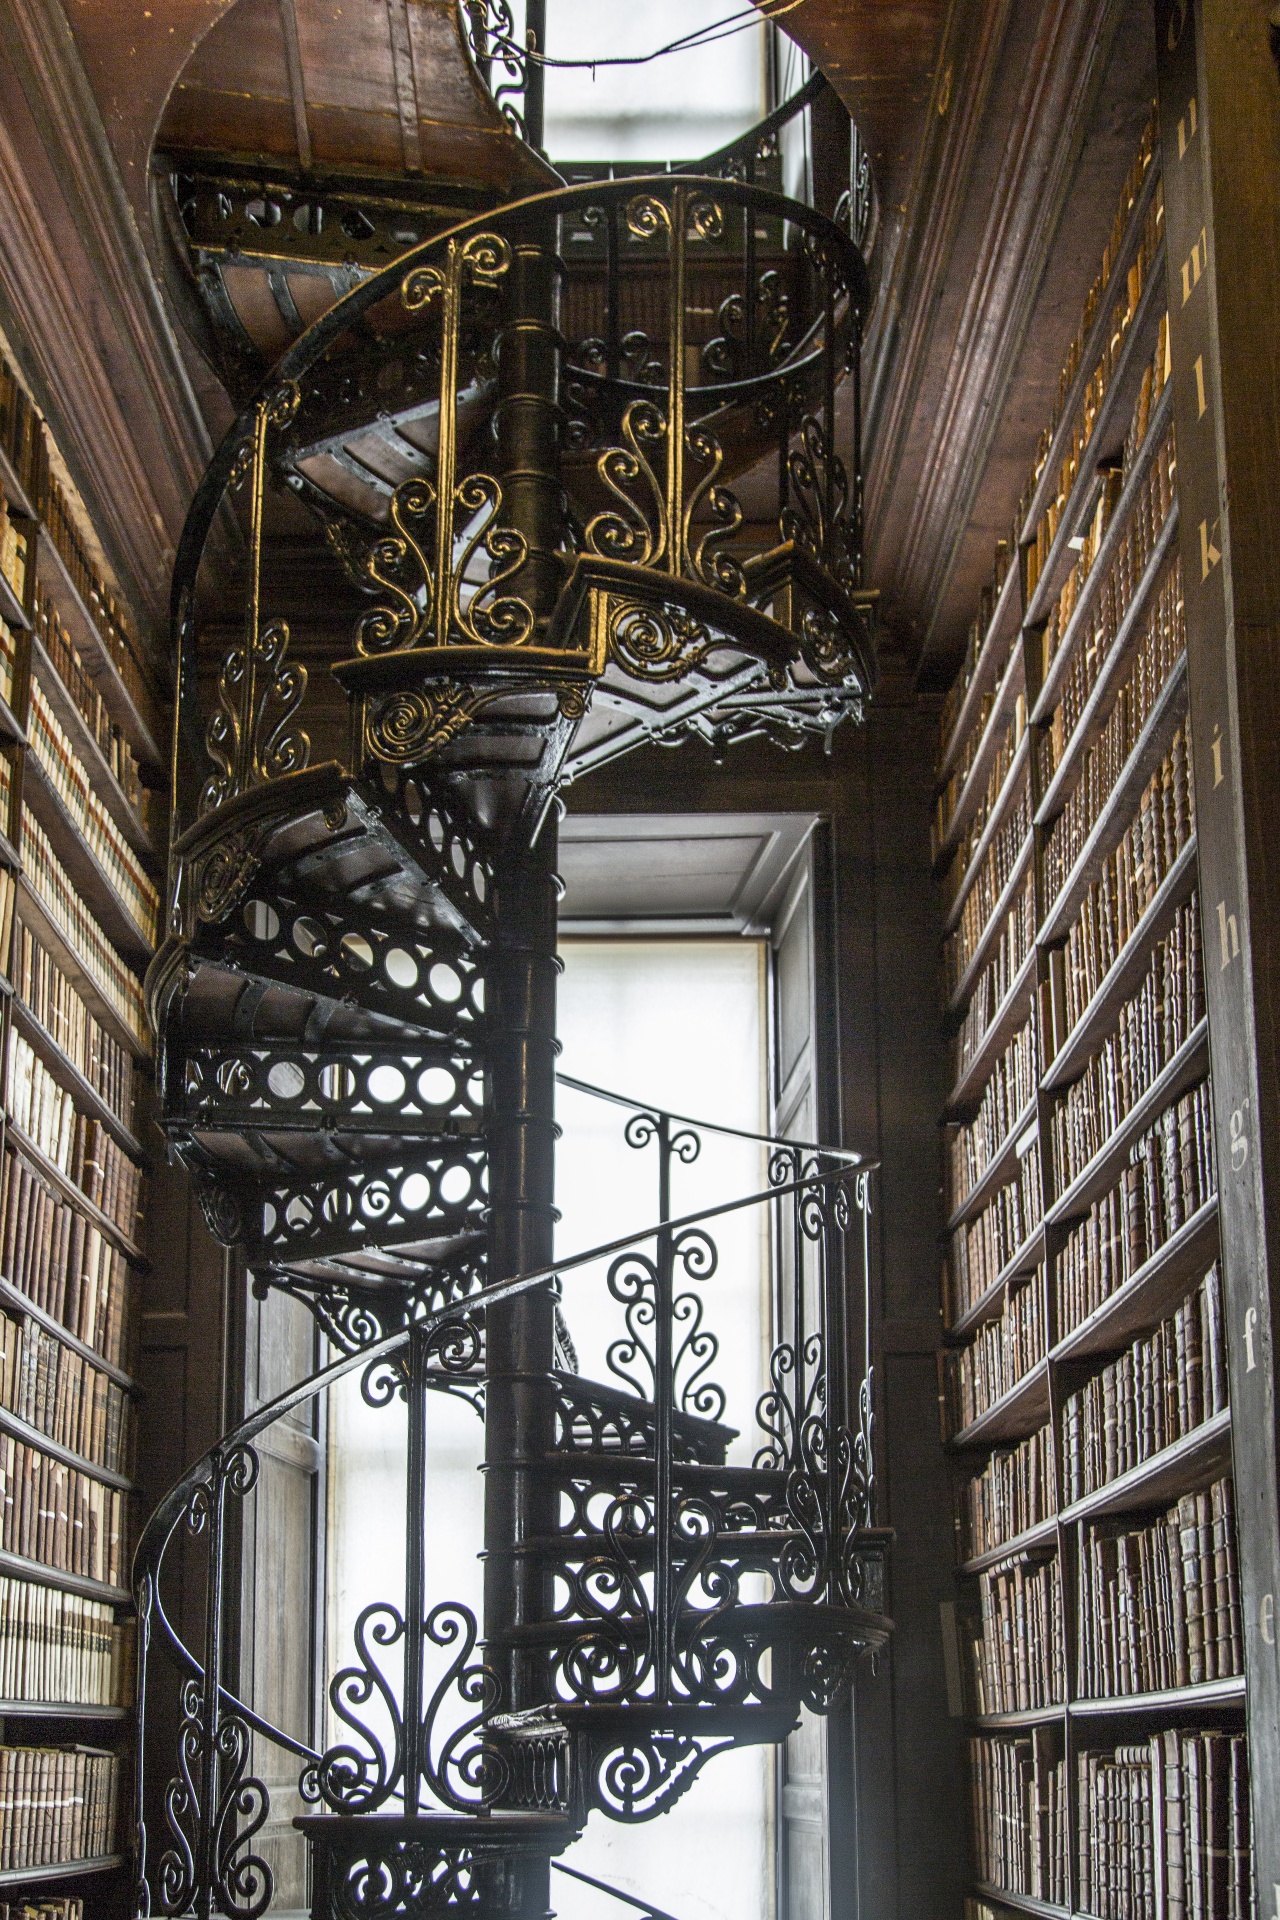 Bibliothek am Trinity College